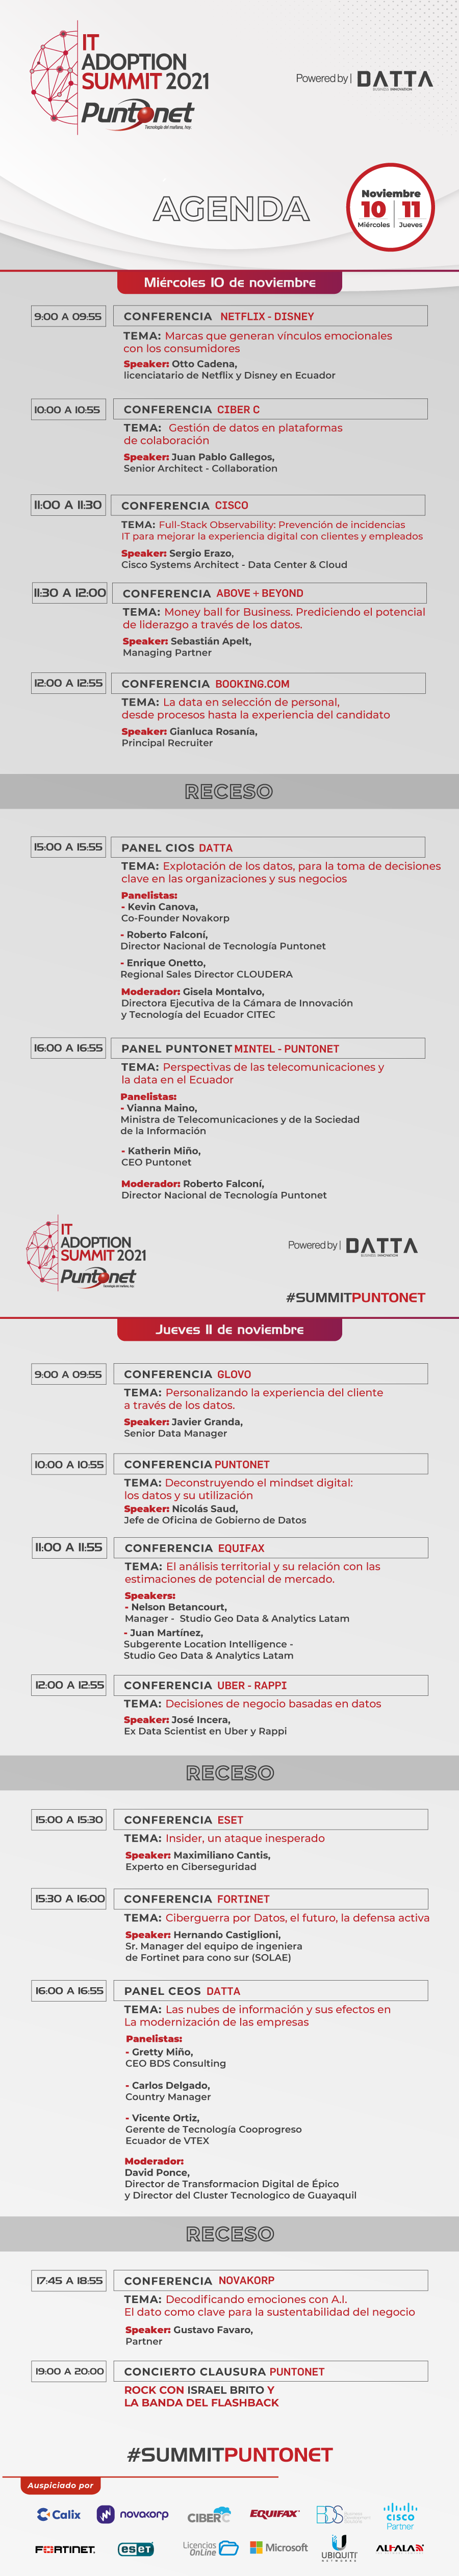 puntonet it adoption summit